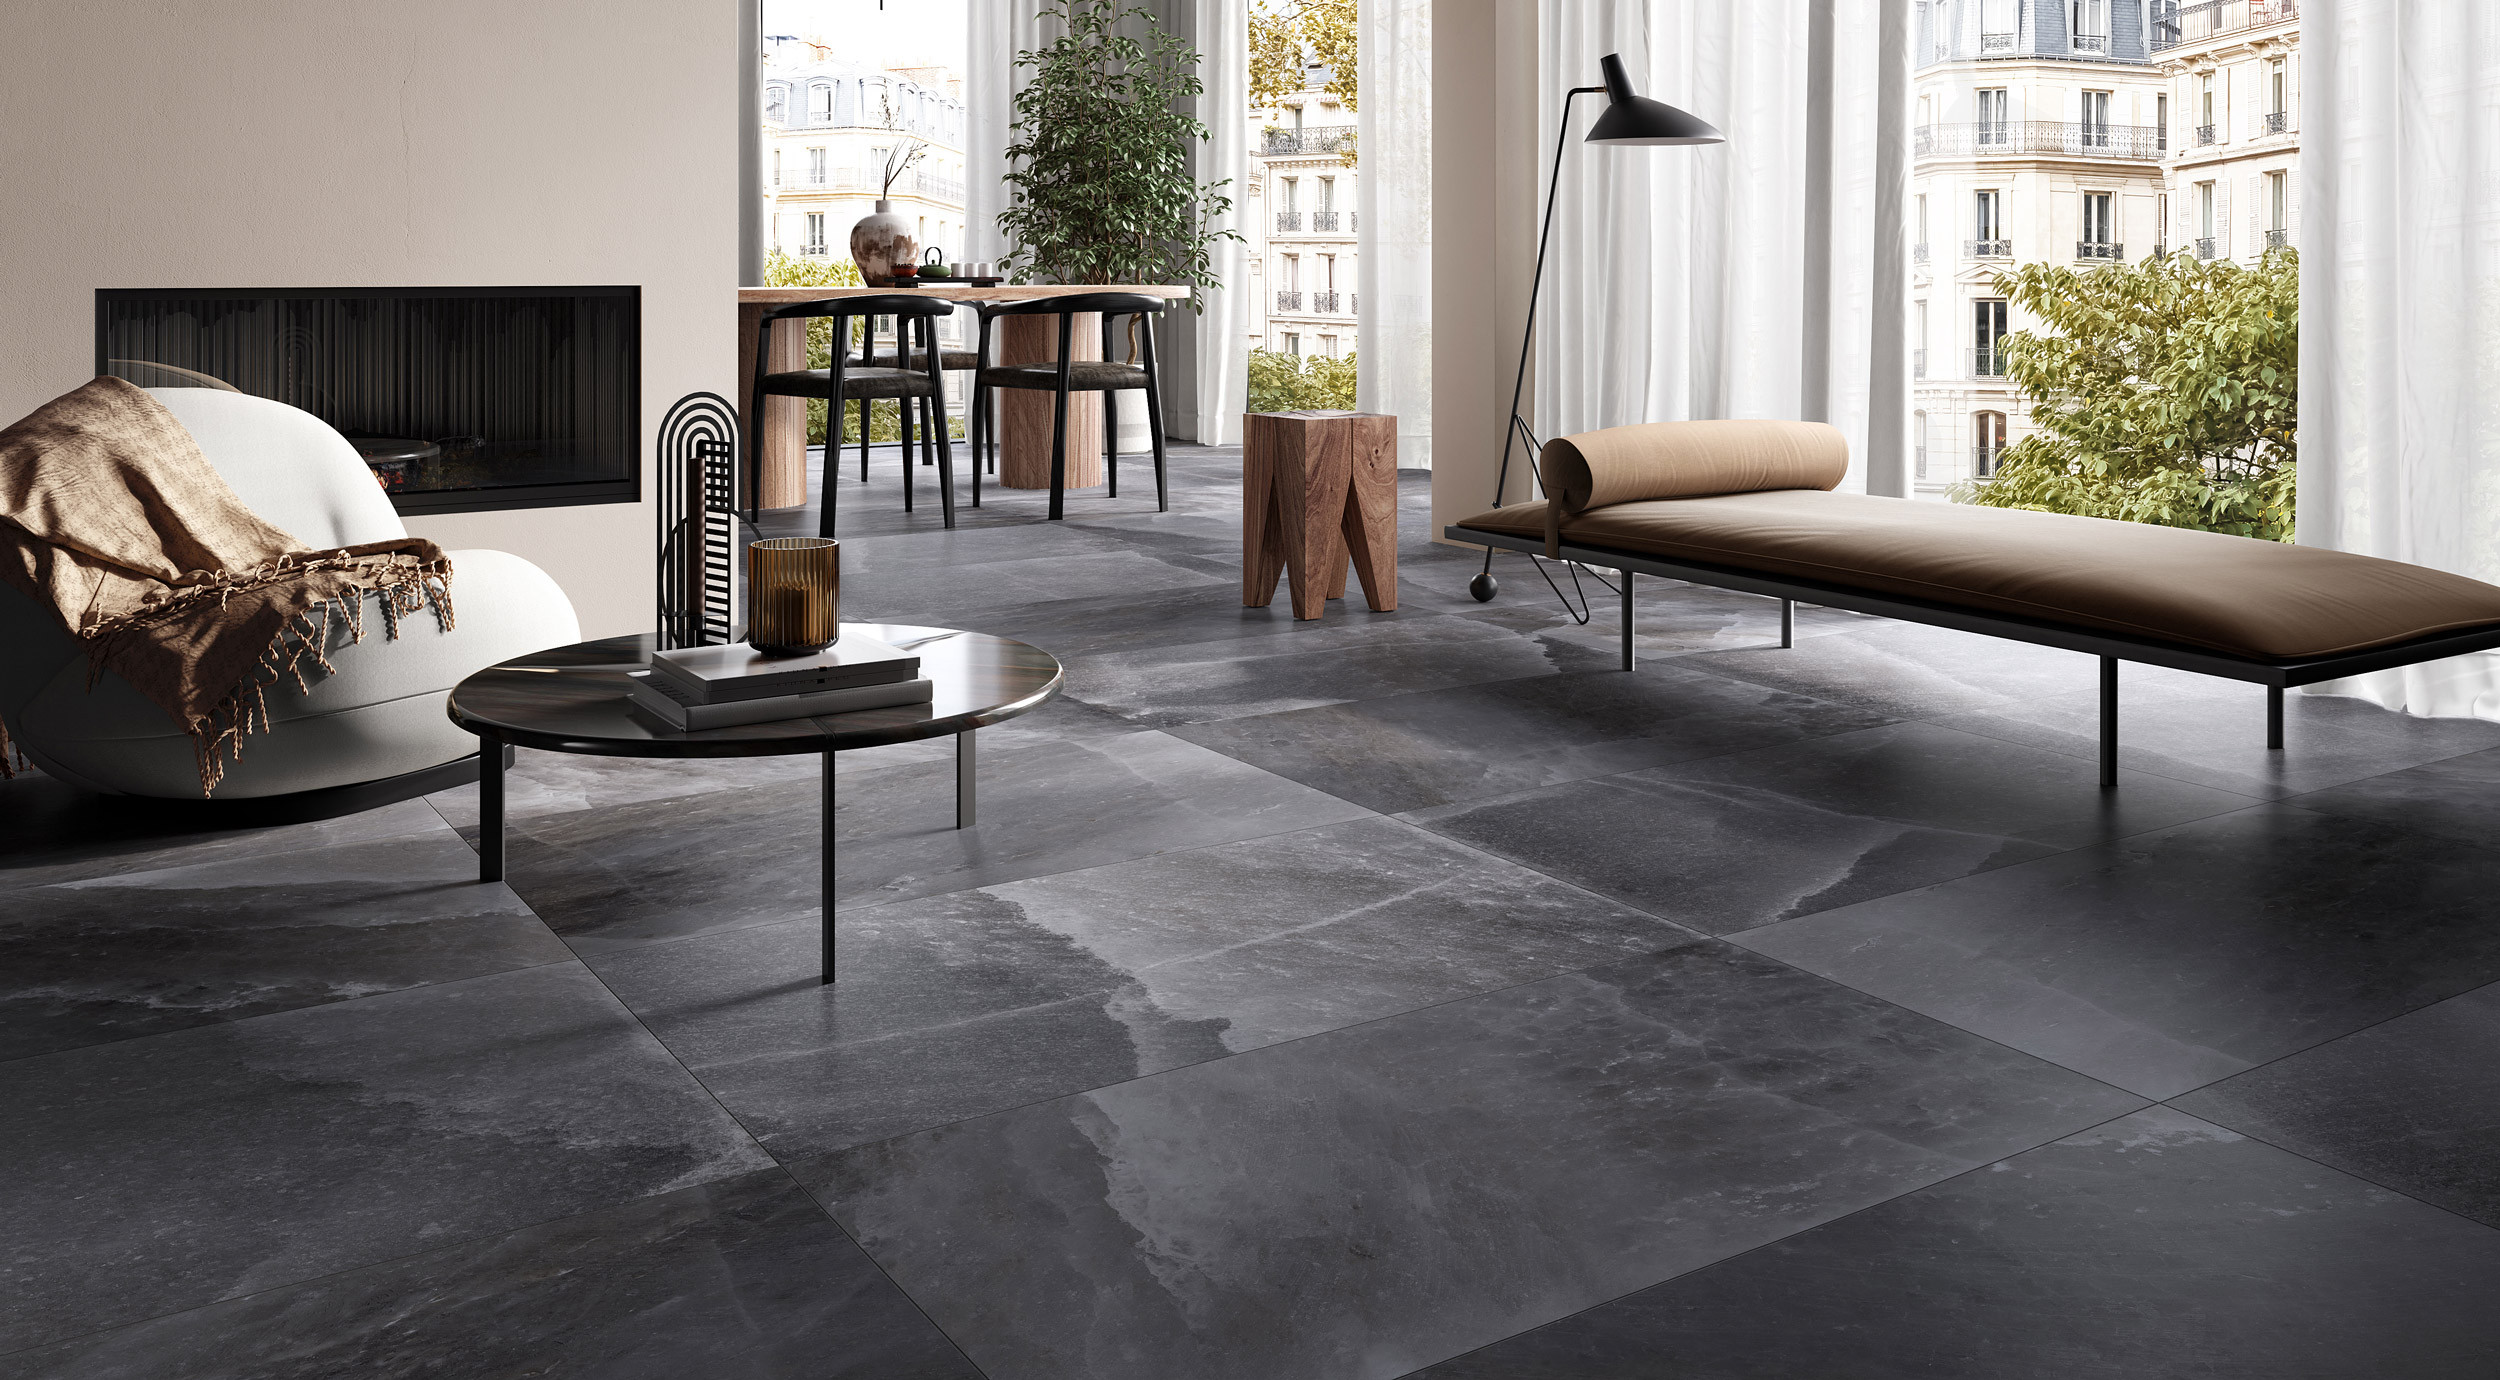 HIMALAYA granite effect porcelain tile floor by RONDINE color BLACK OPACO
